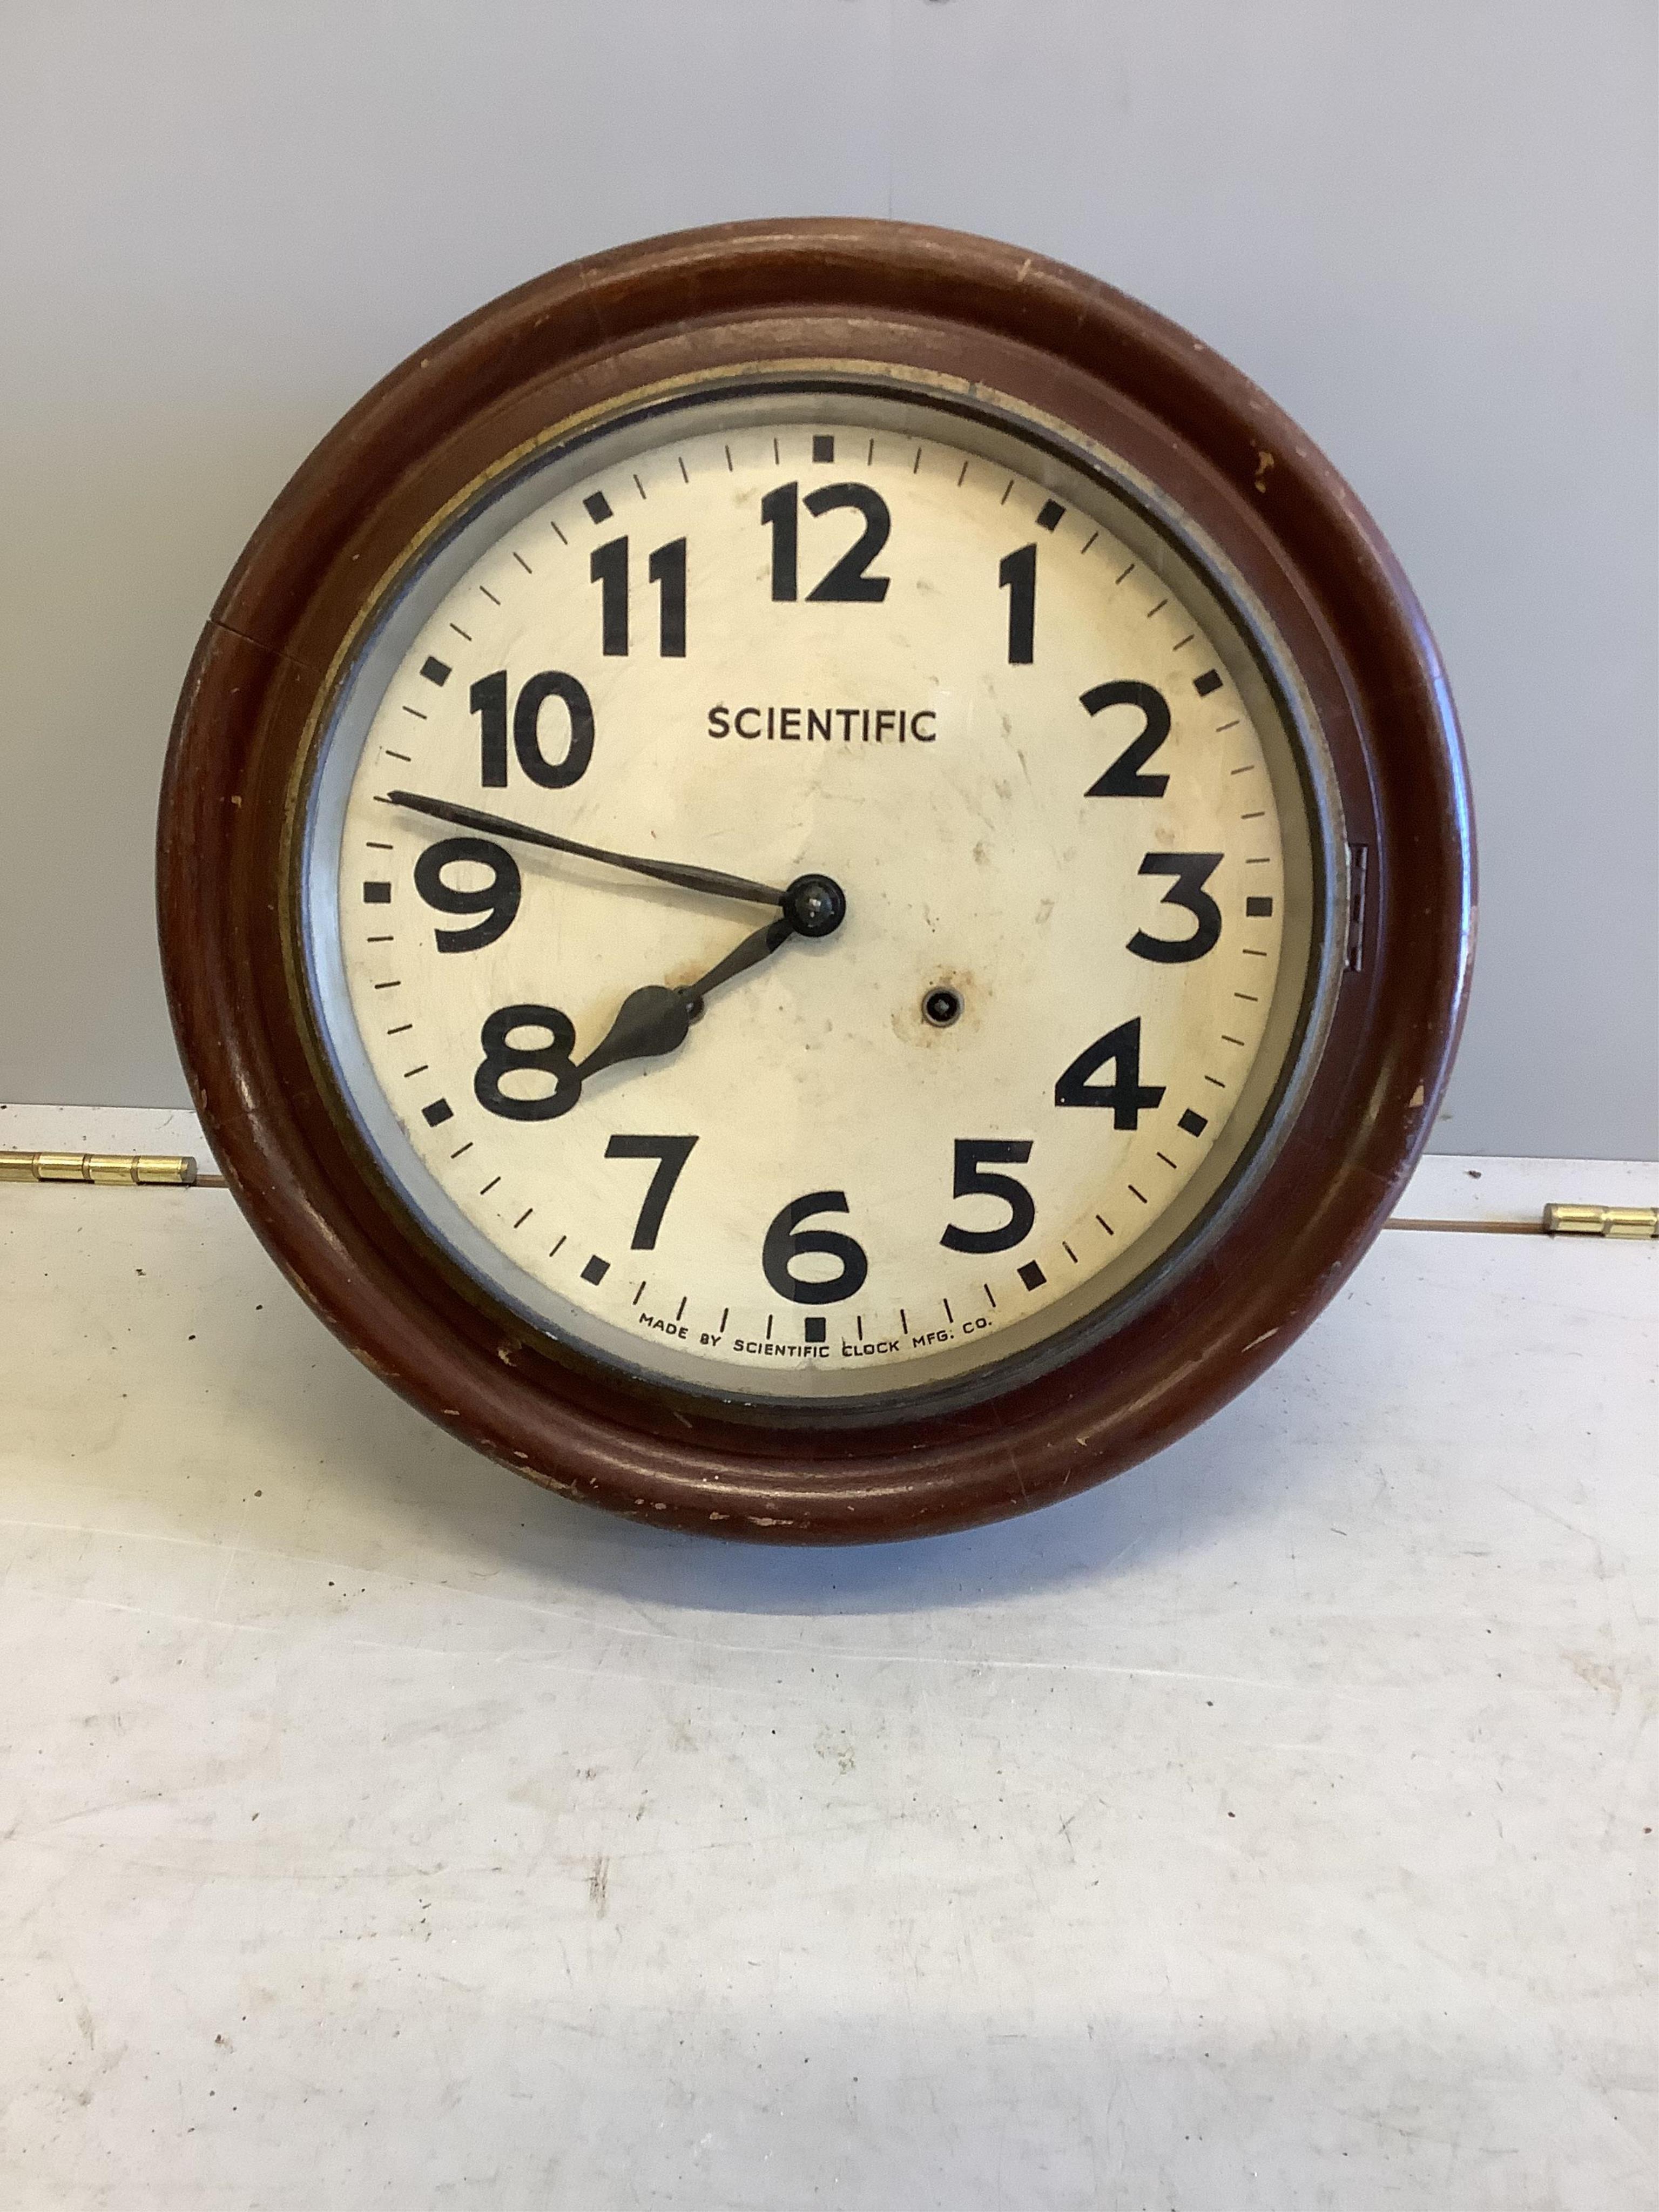 A circular wall clock, marked Scientific, diameter 41cm depth 13cm. Condition - fair